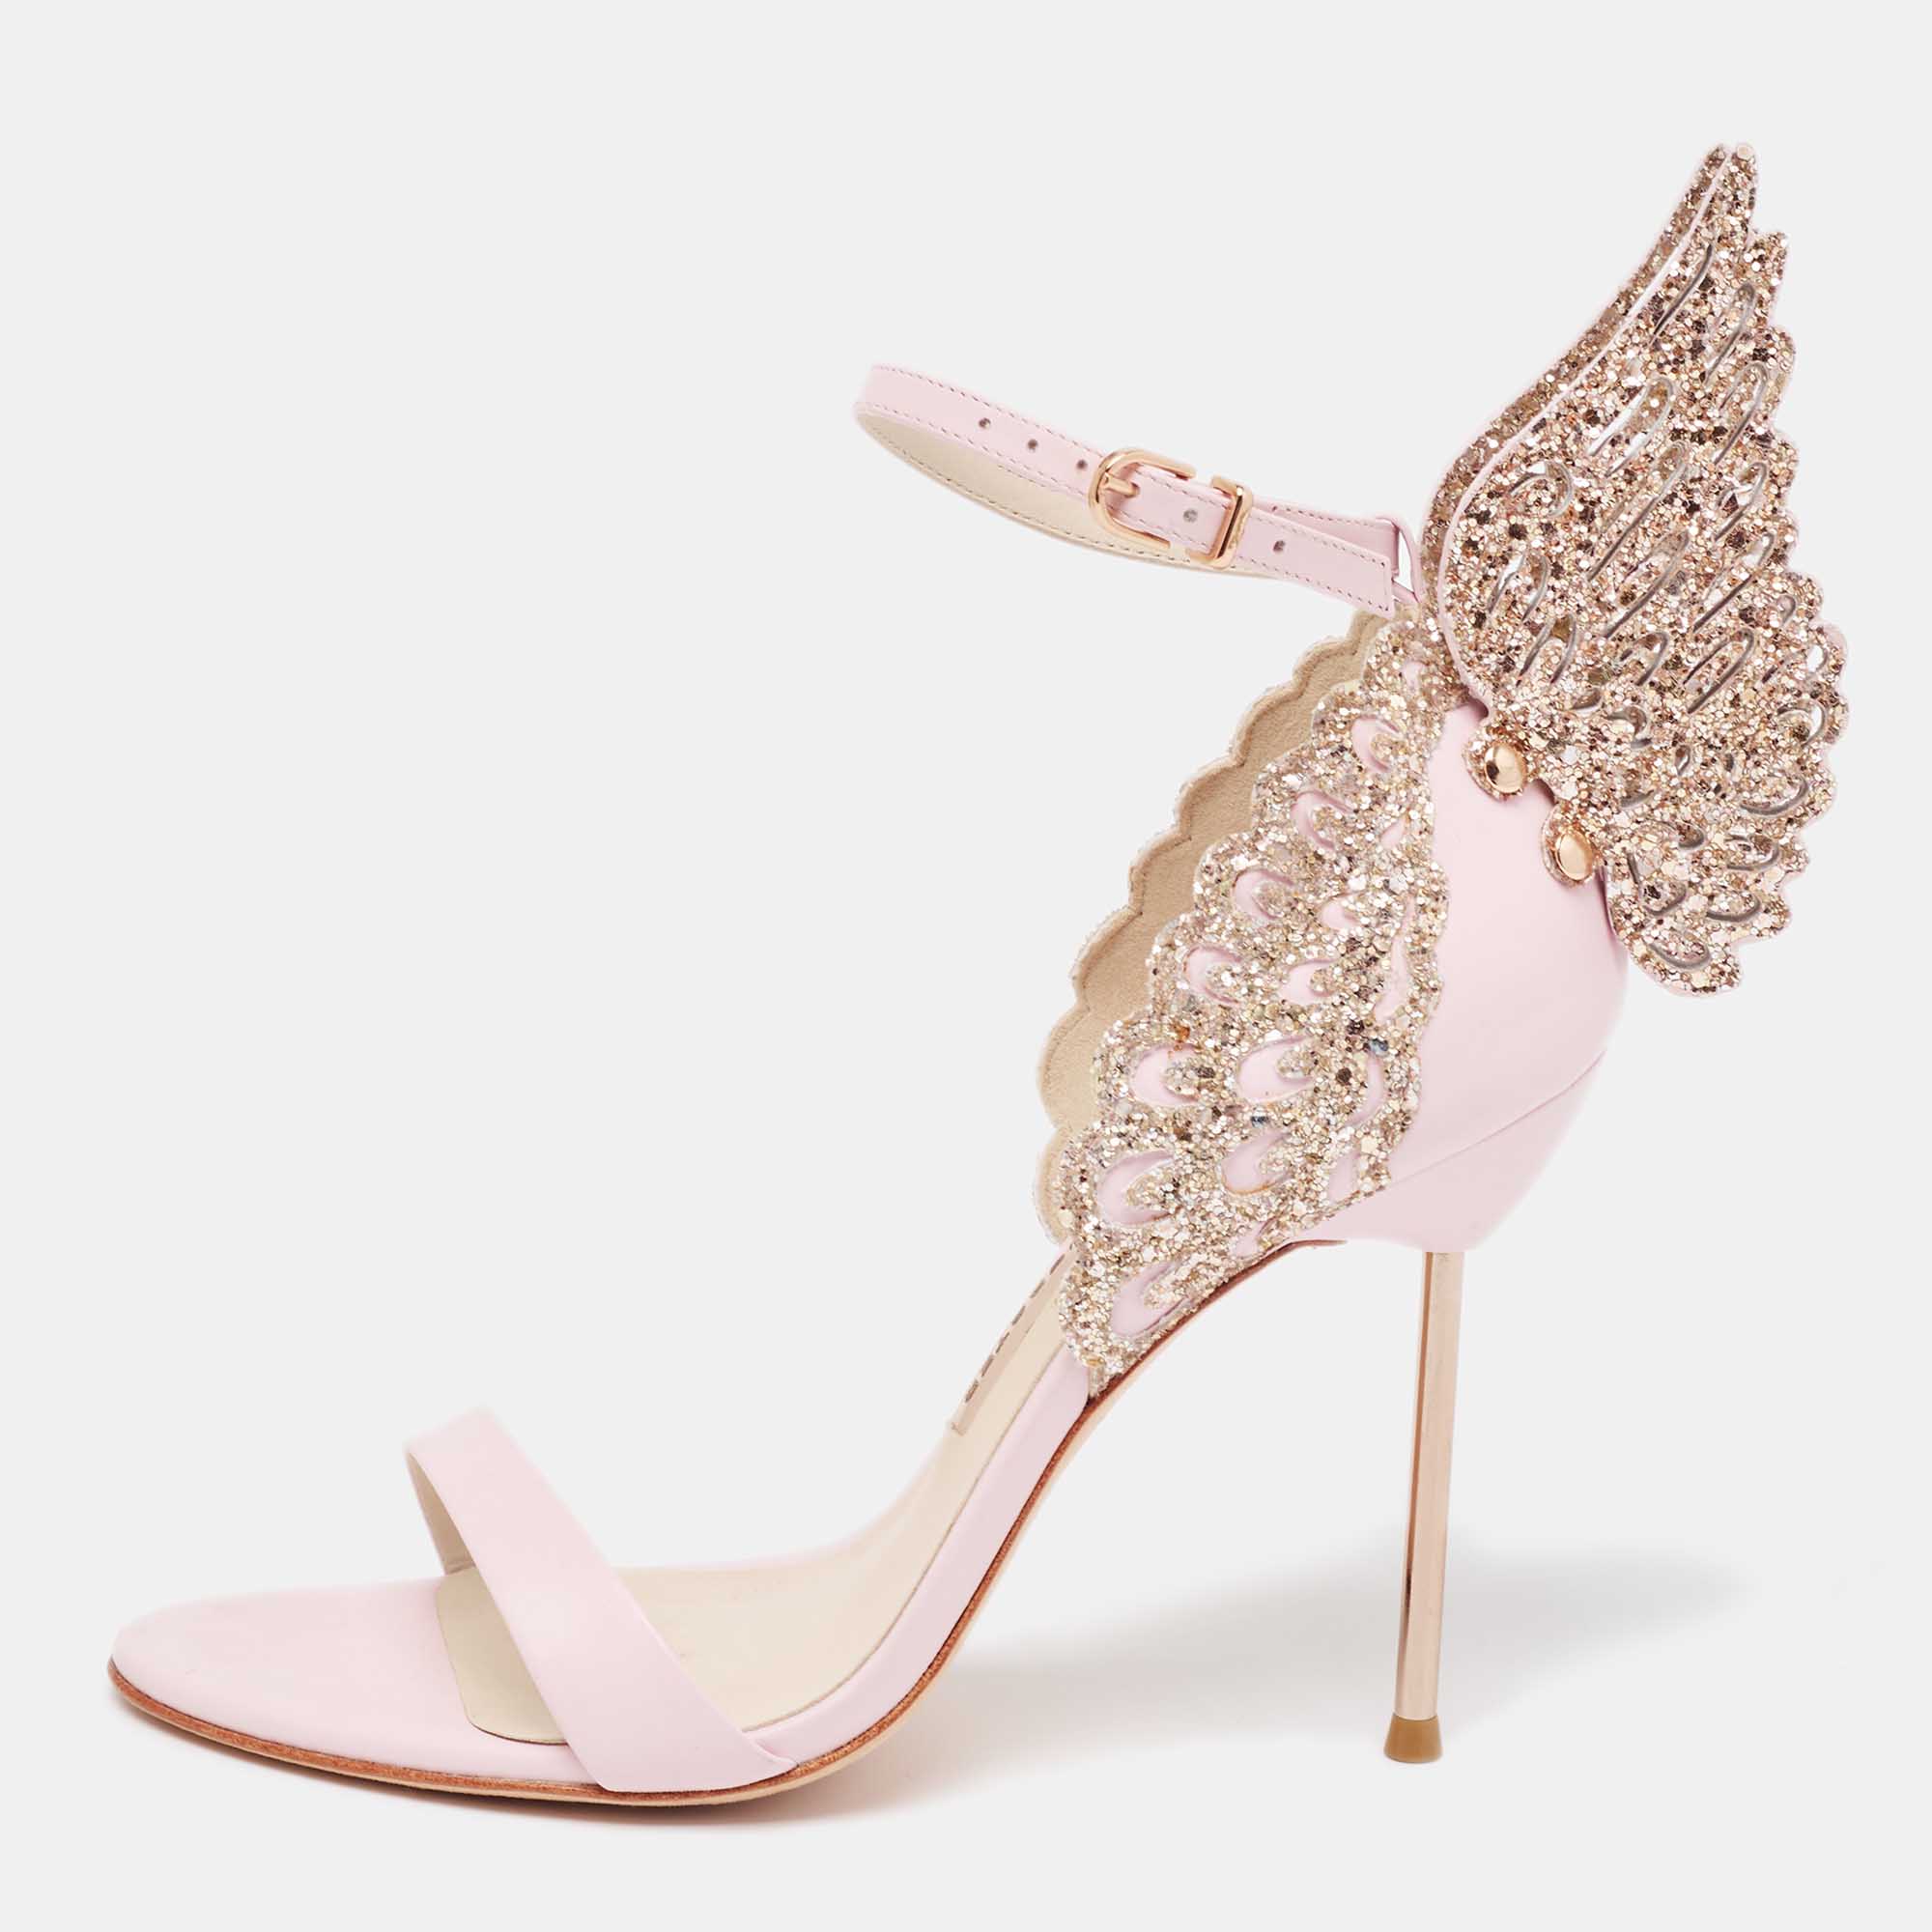 Sophia webster  pink leather and glitter evangeline ankle strap sandals size 38.5